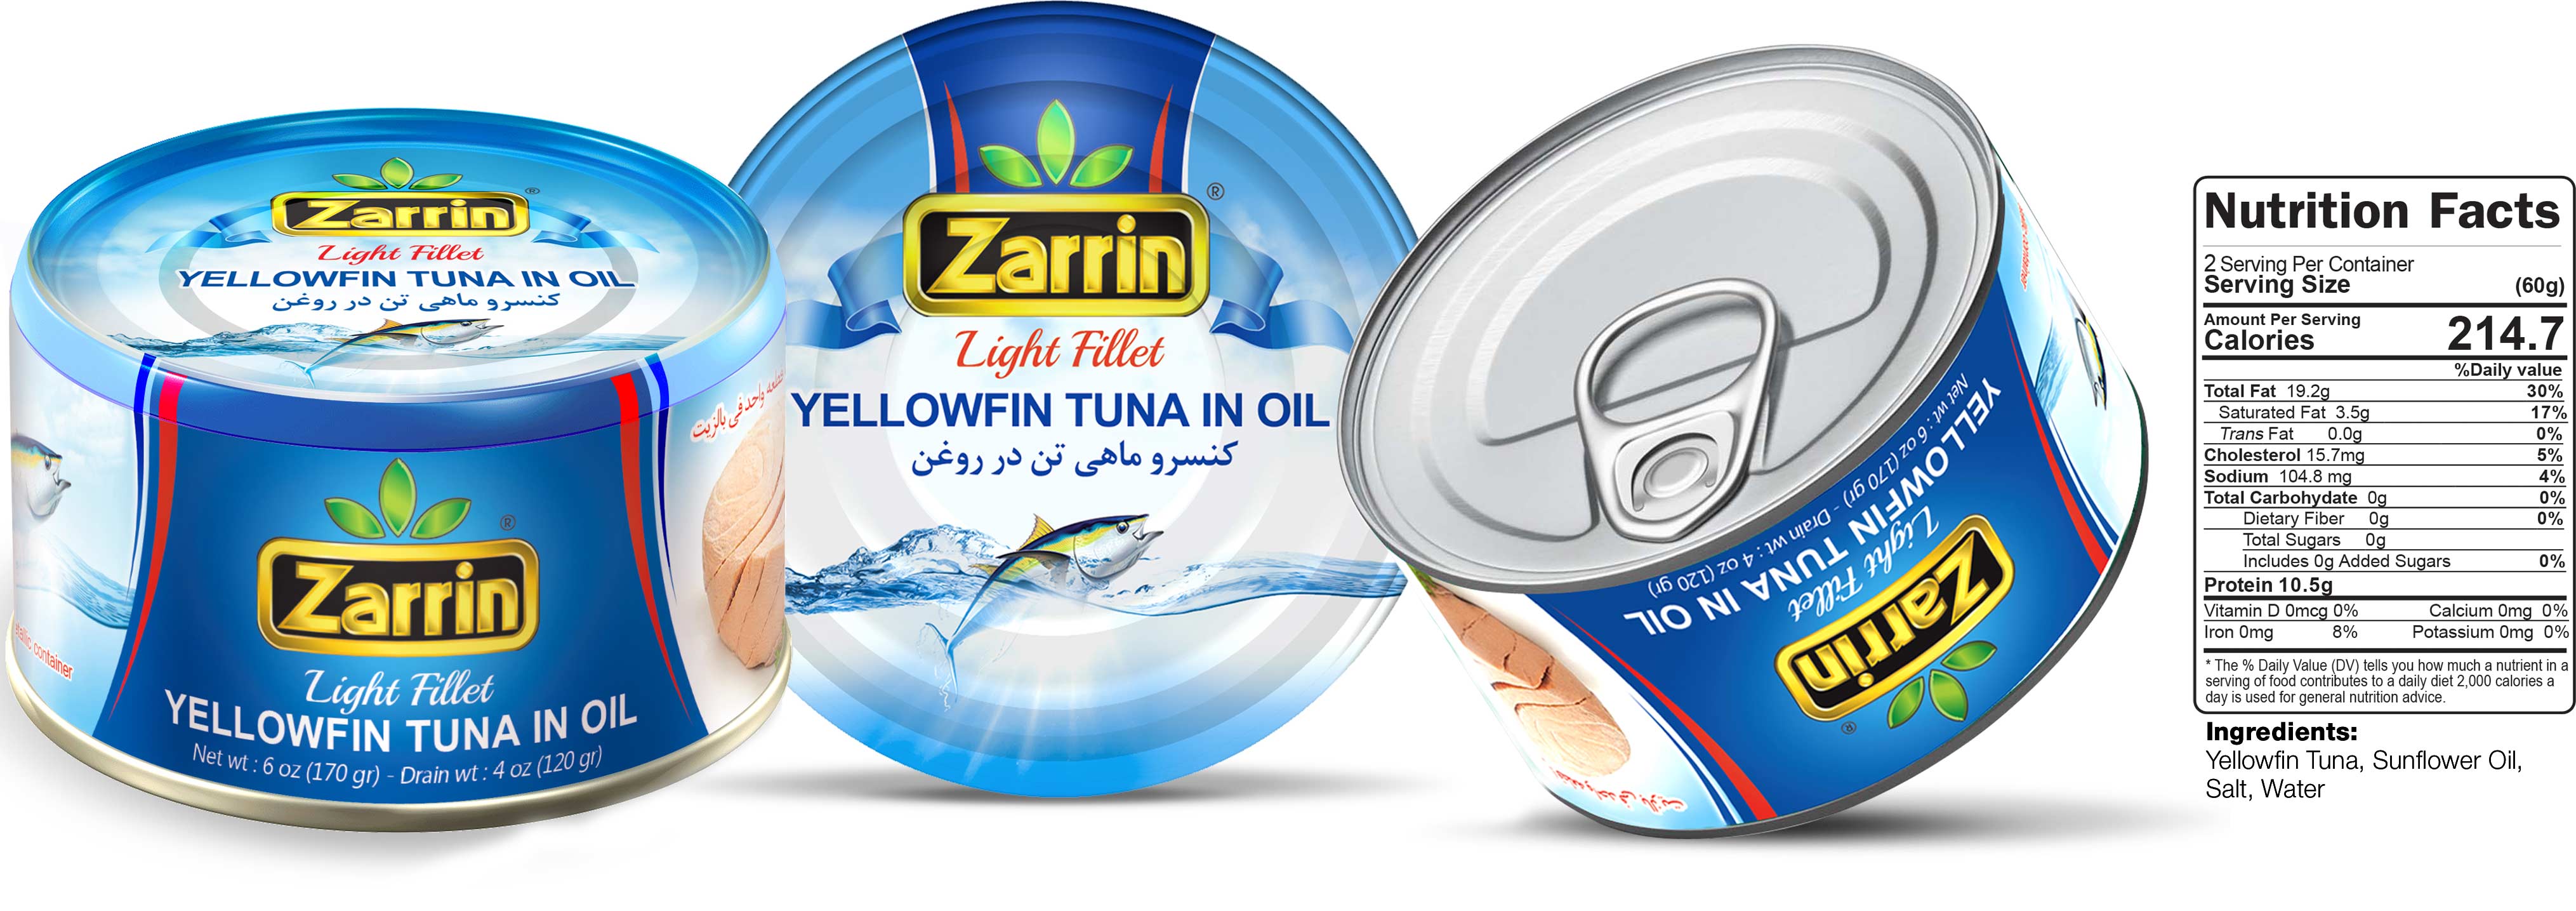 Zarrin yellowfin tuna fish in tin can with net weight 6oz.